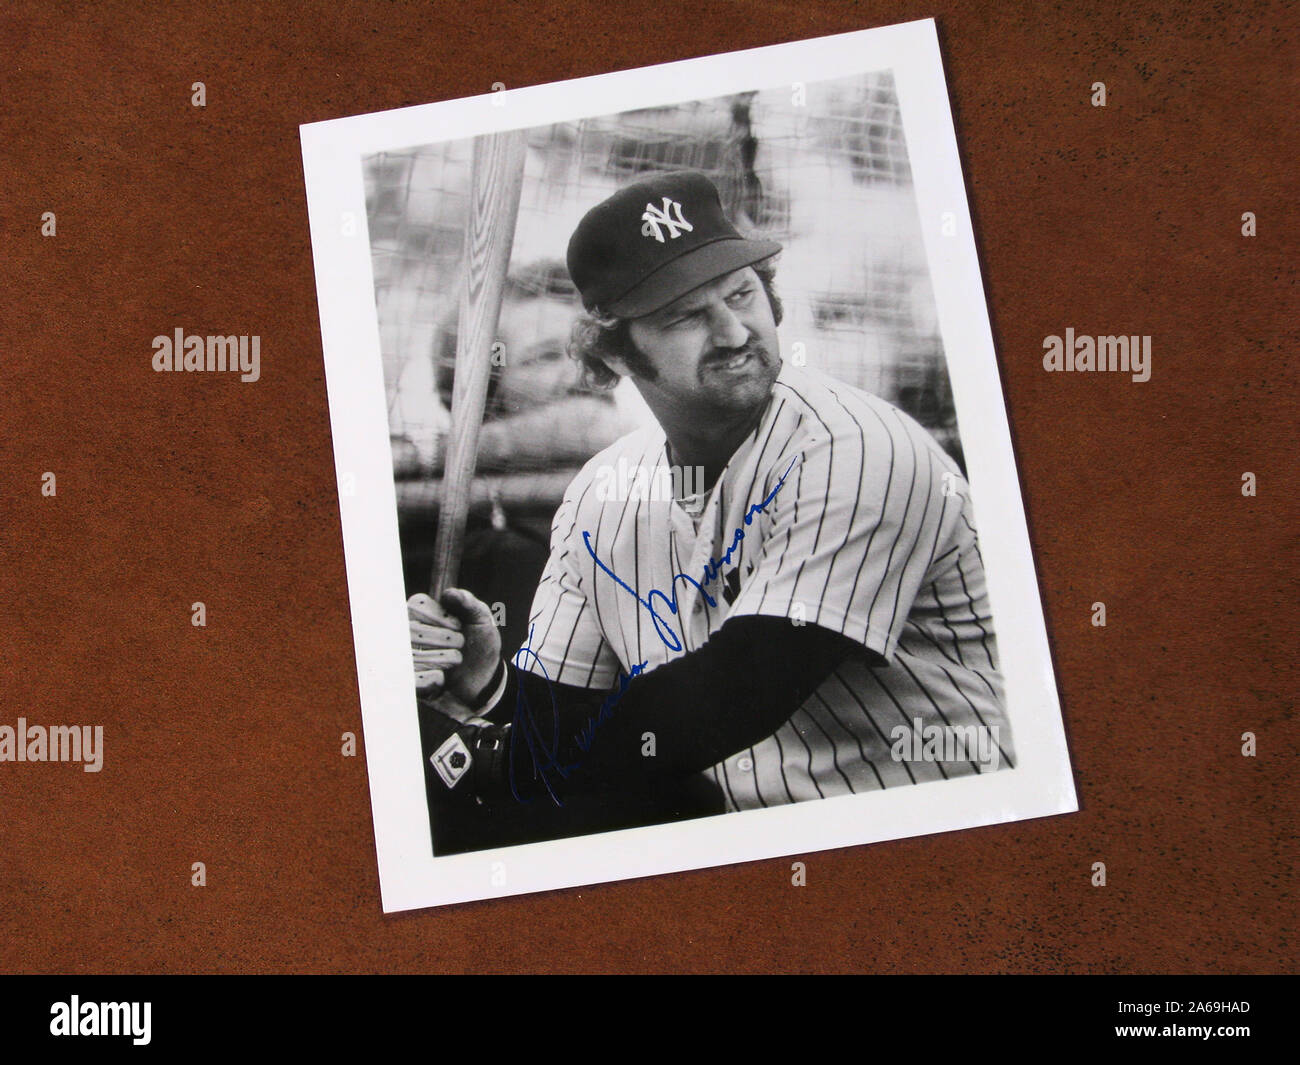 Vintage Yankees player Thurman Munson signed photo. Stock Photo